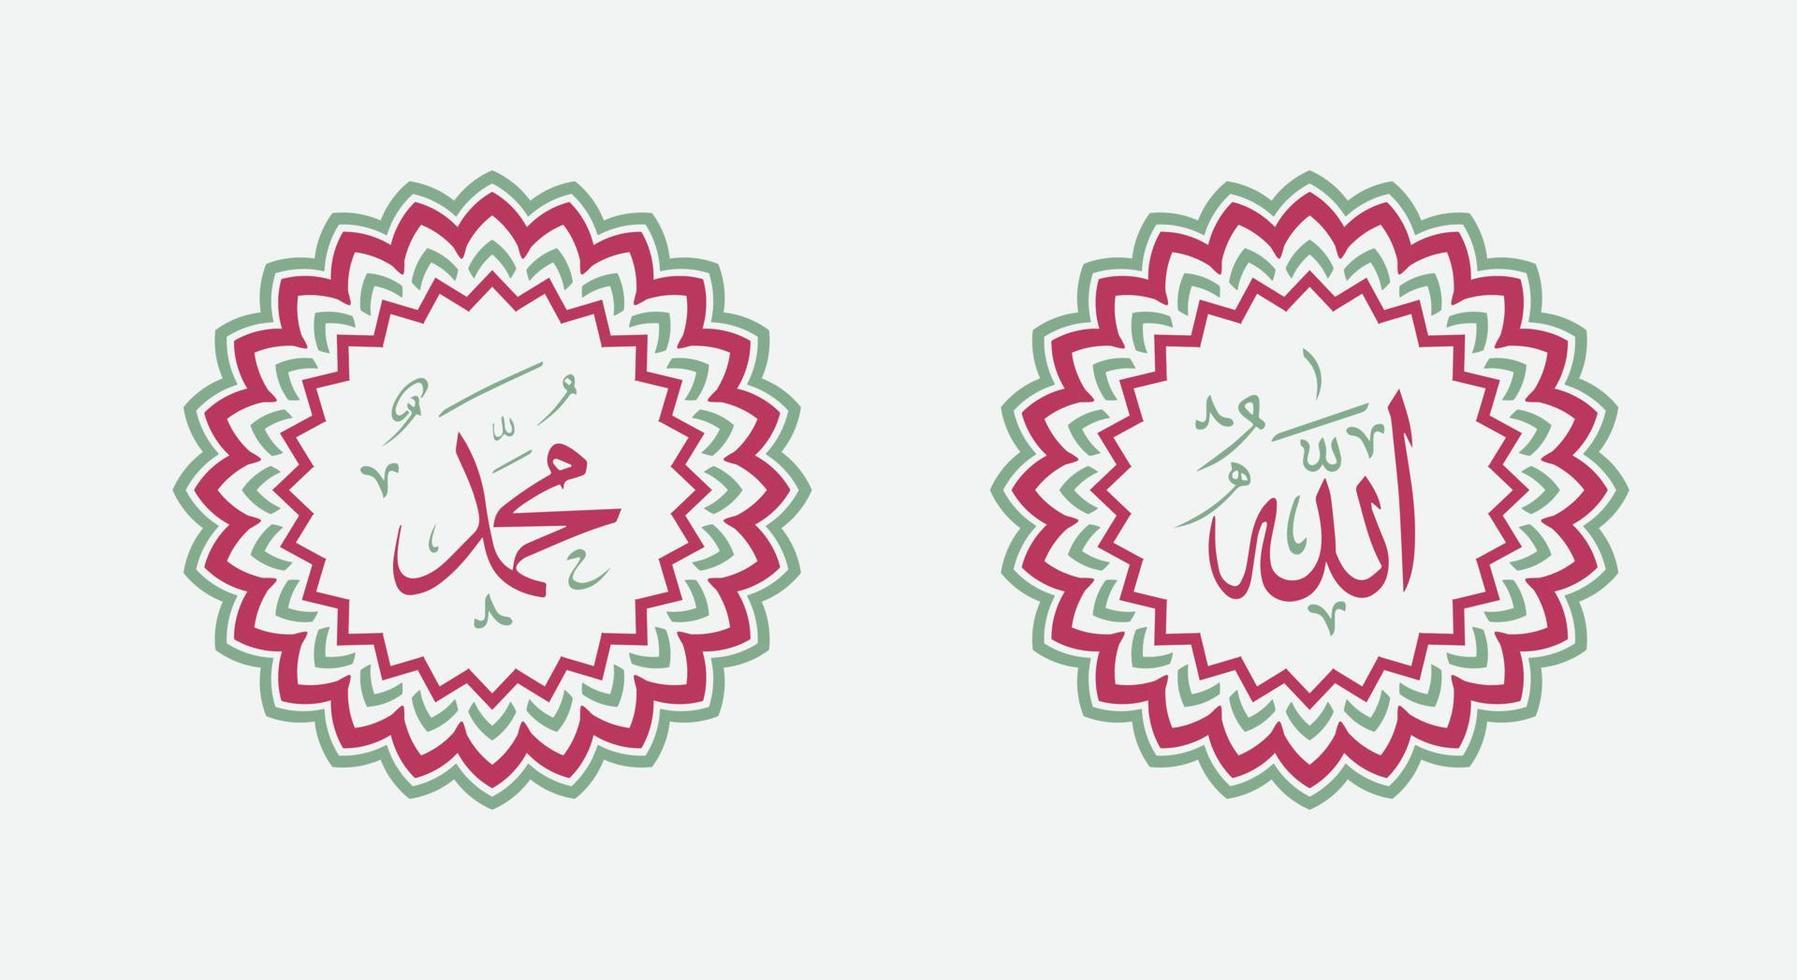 allah muhammad arabische kalligrafie mit modernem kreisrahmen vektor